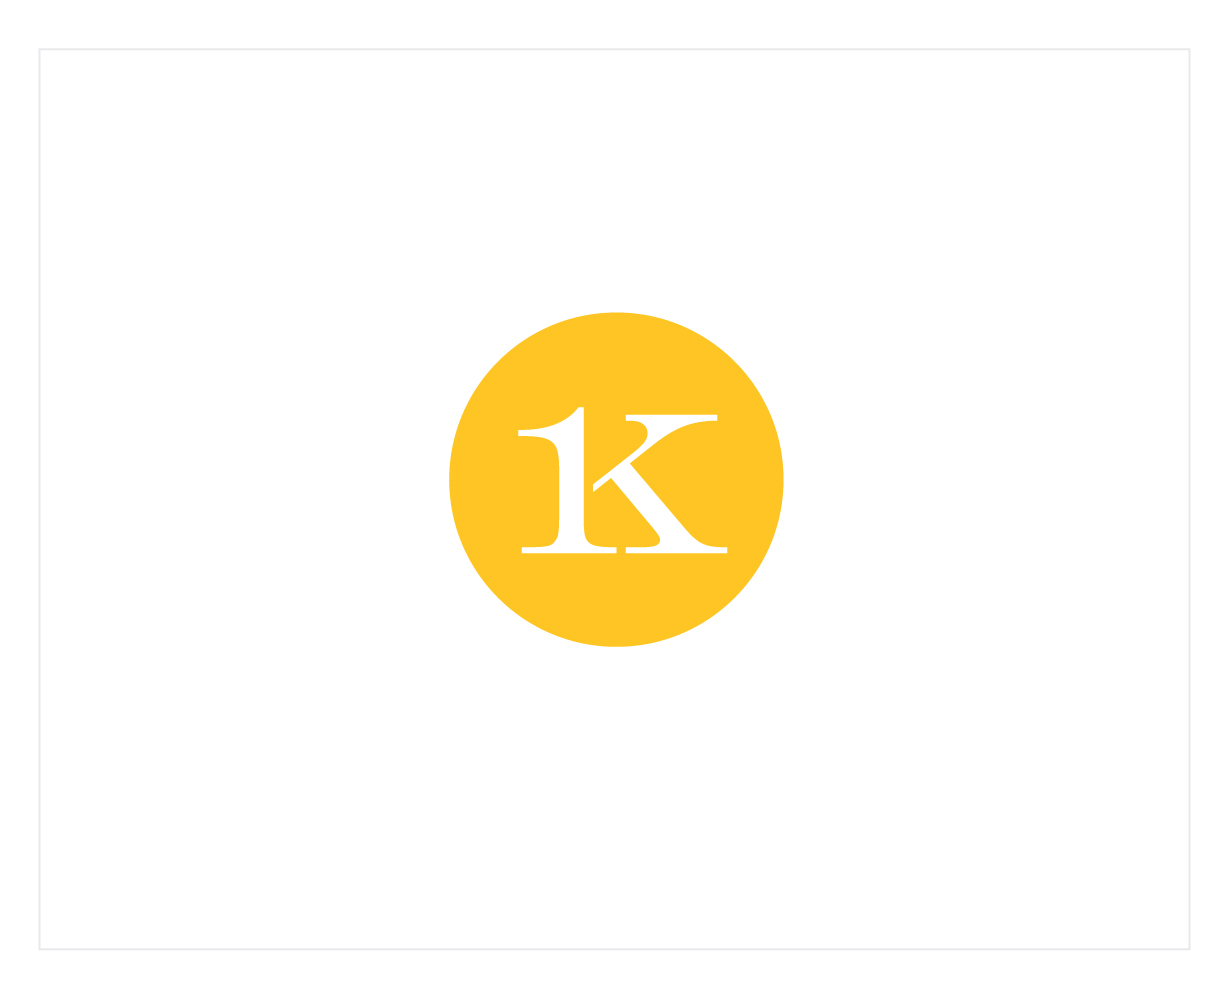 Krillion Ventures Logo